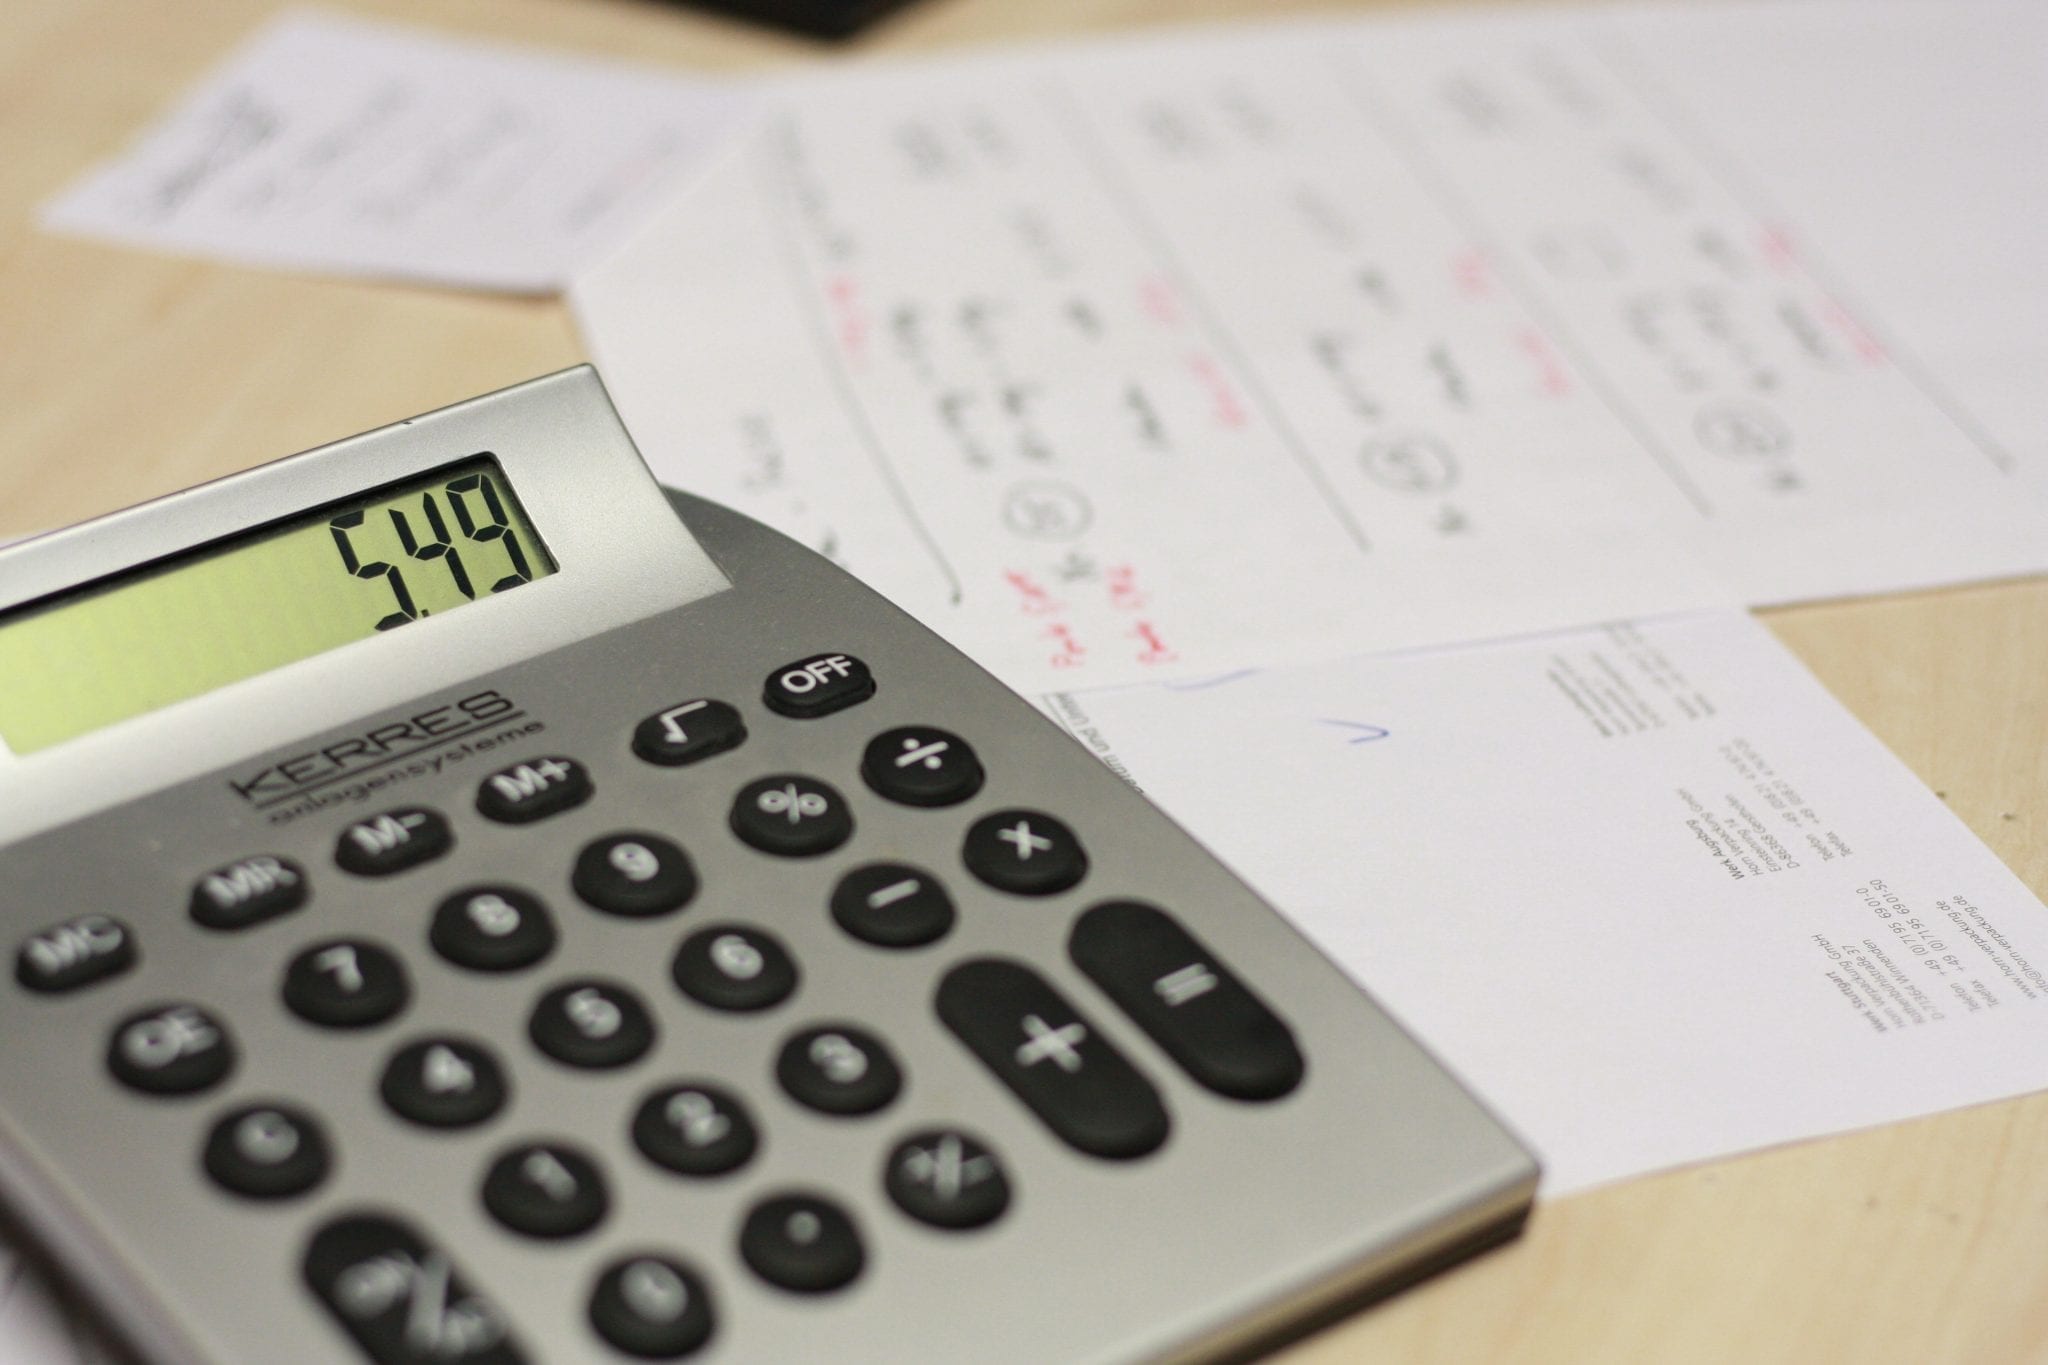 Calculator and paperwork; image via Pxhere, CC0.